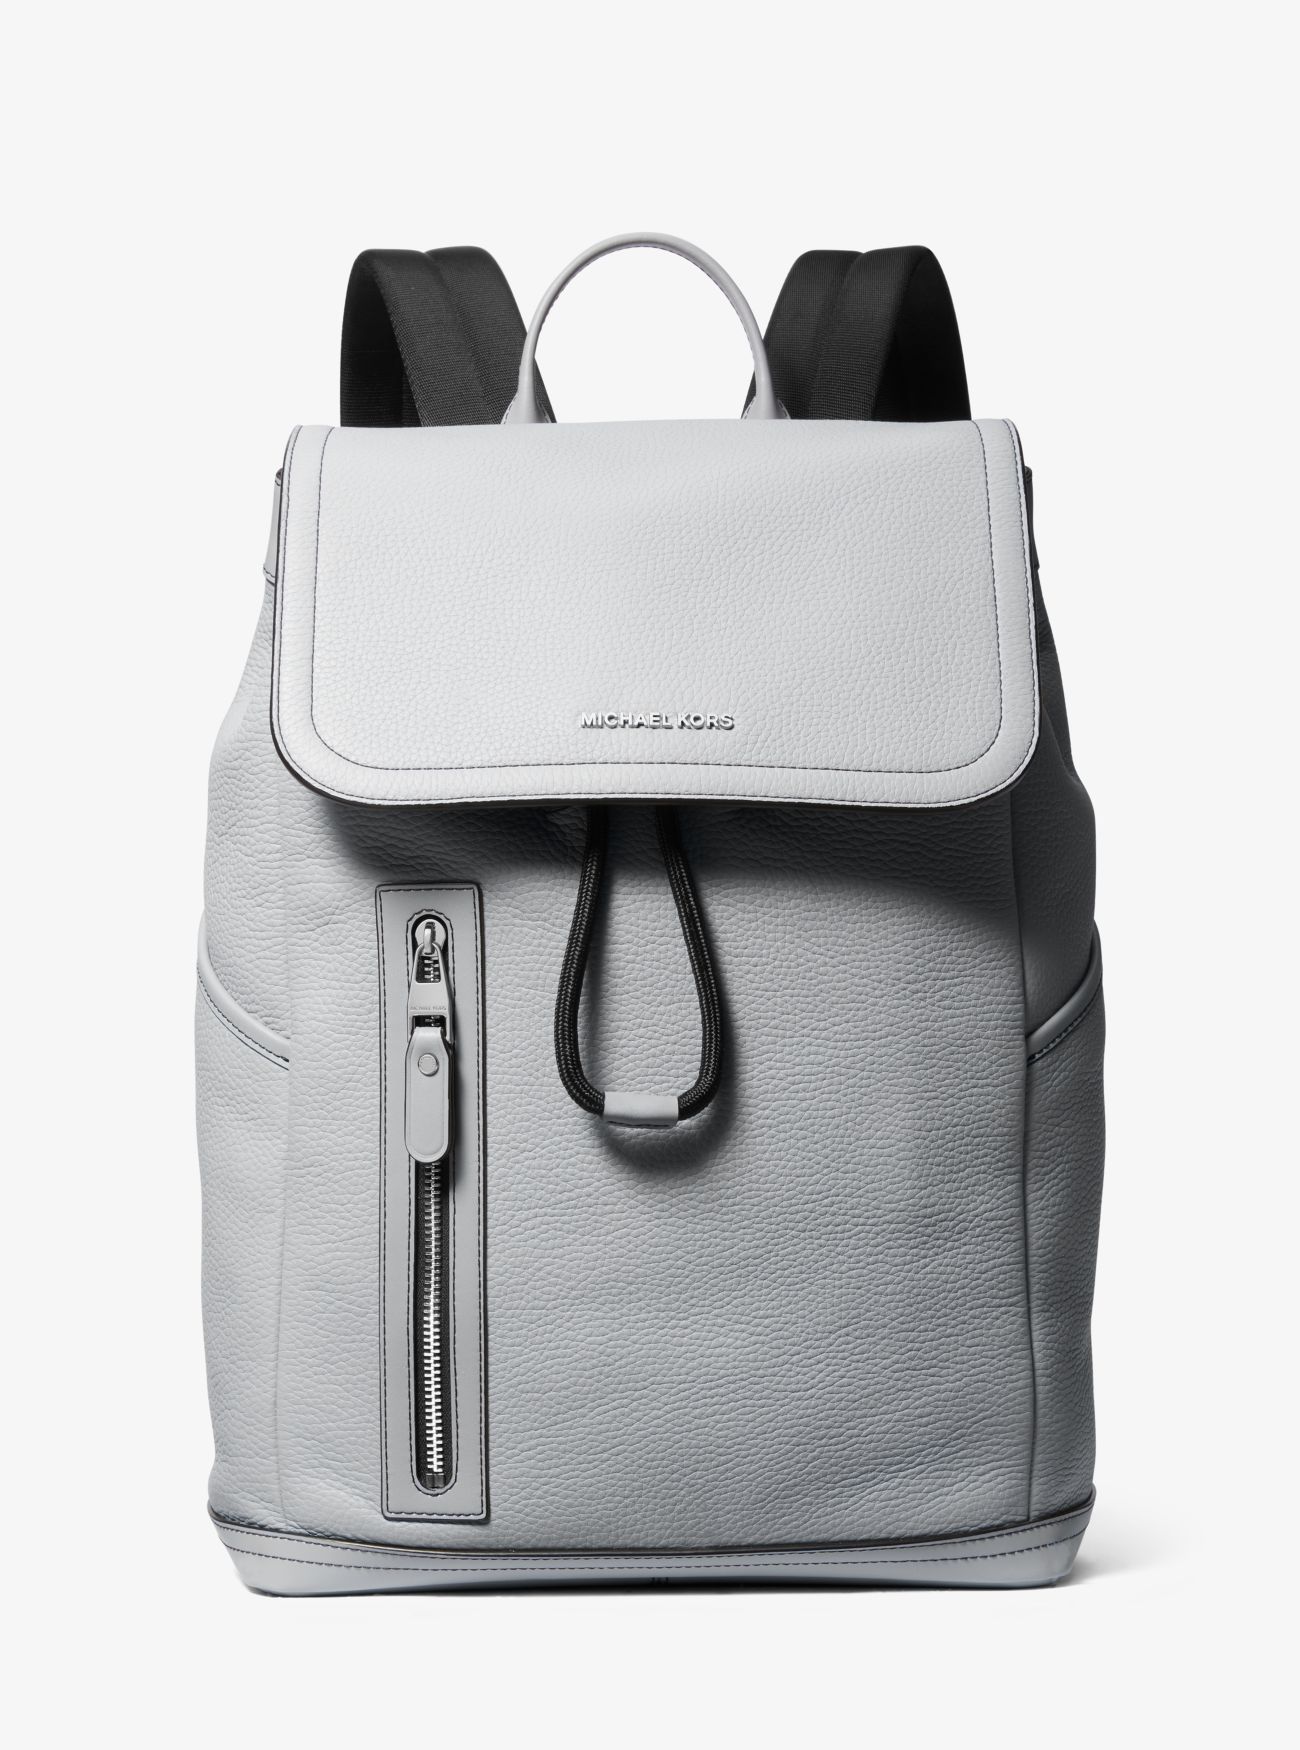 MK Hudson Pebbled Leather Utility Backpack - White - Michael Kors